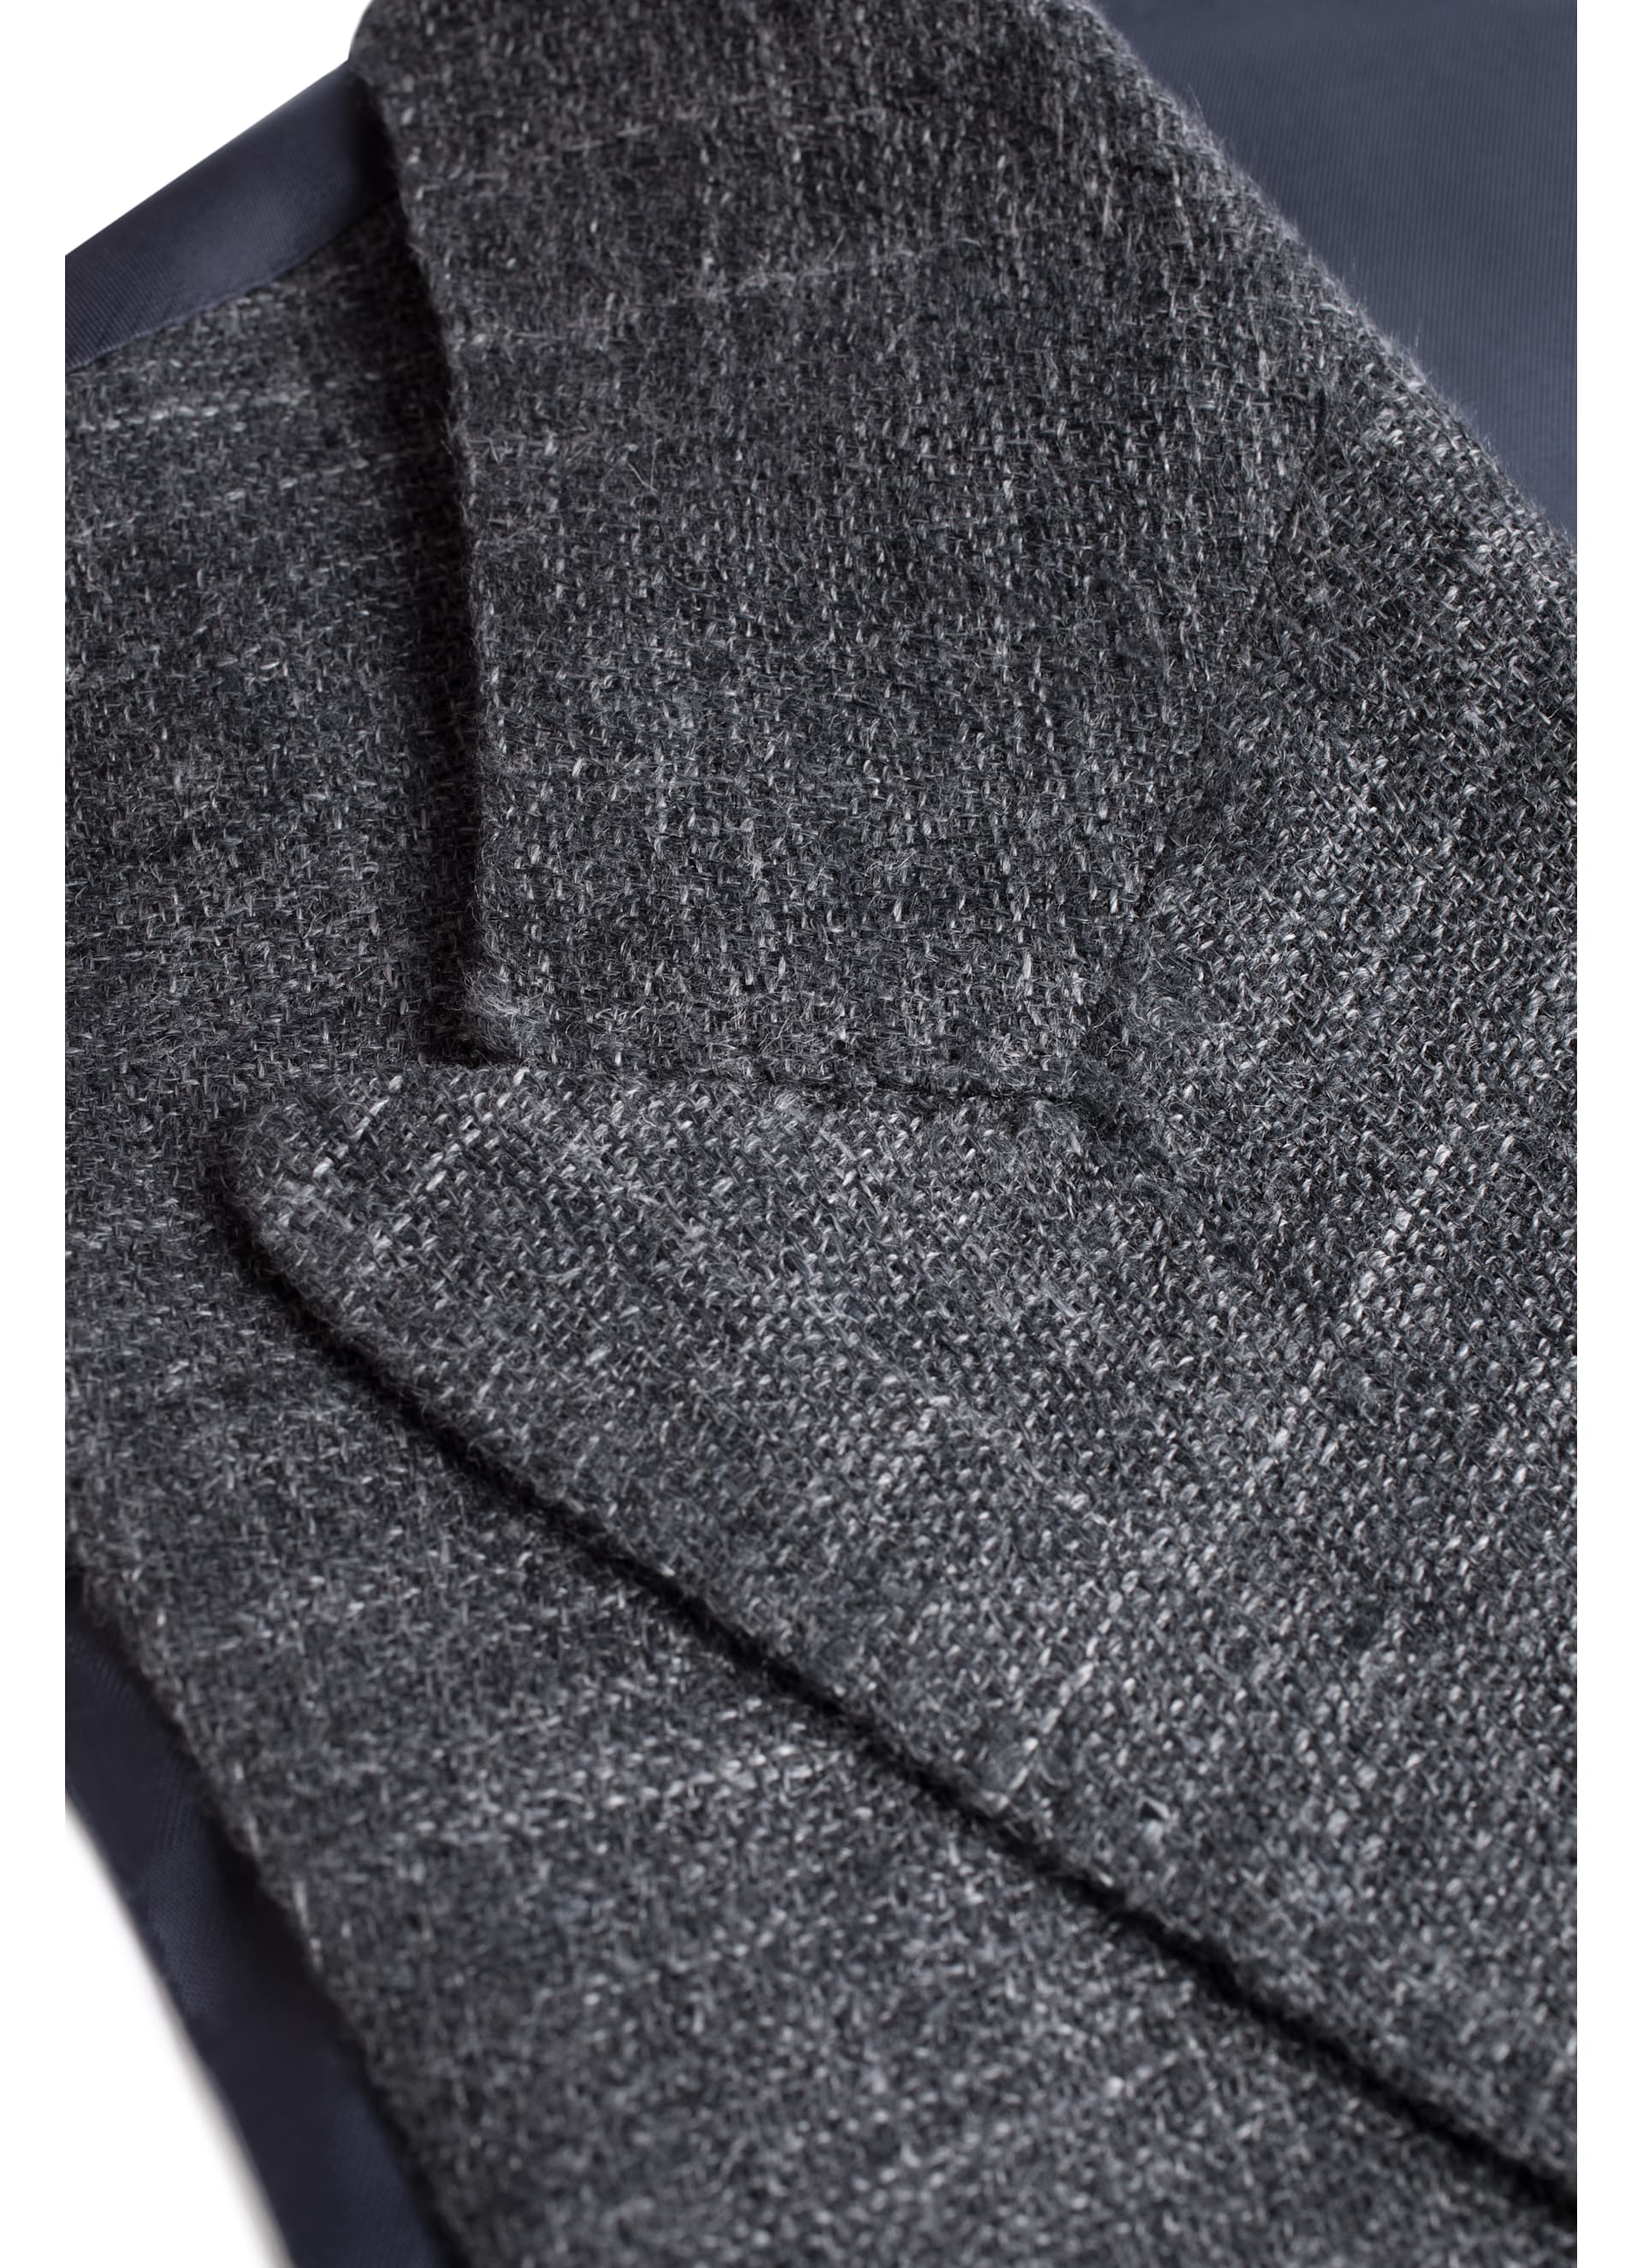 Grey Waistcoat W180101i | Suitsupply Online Store